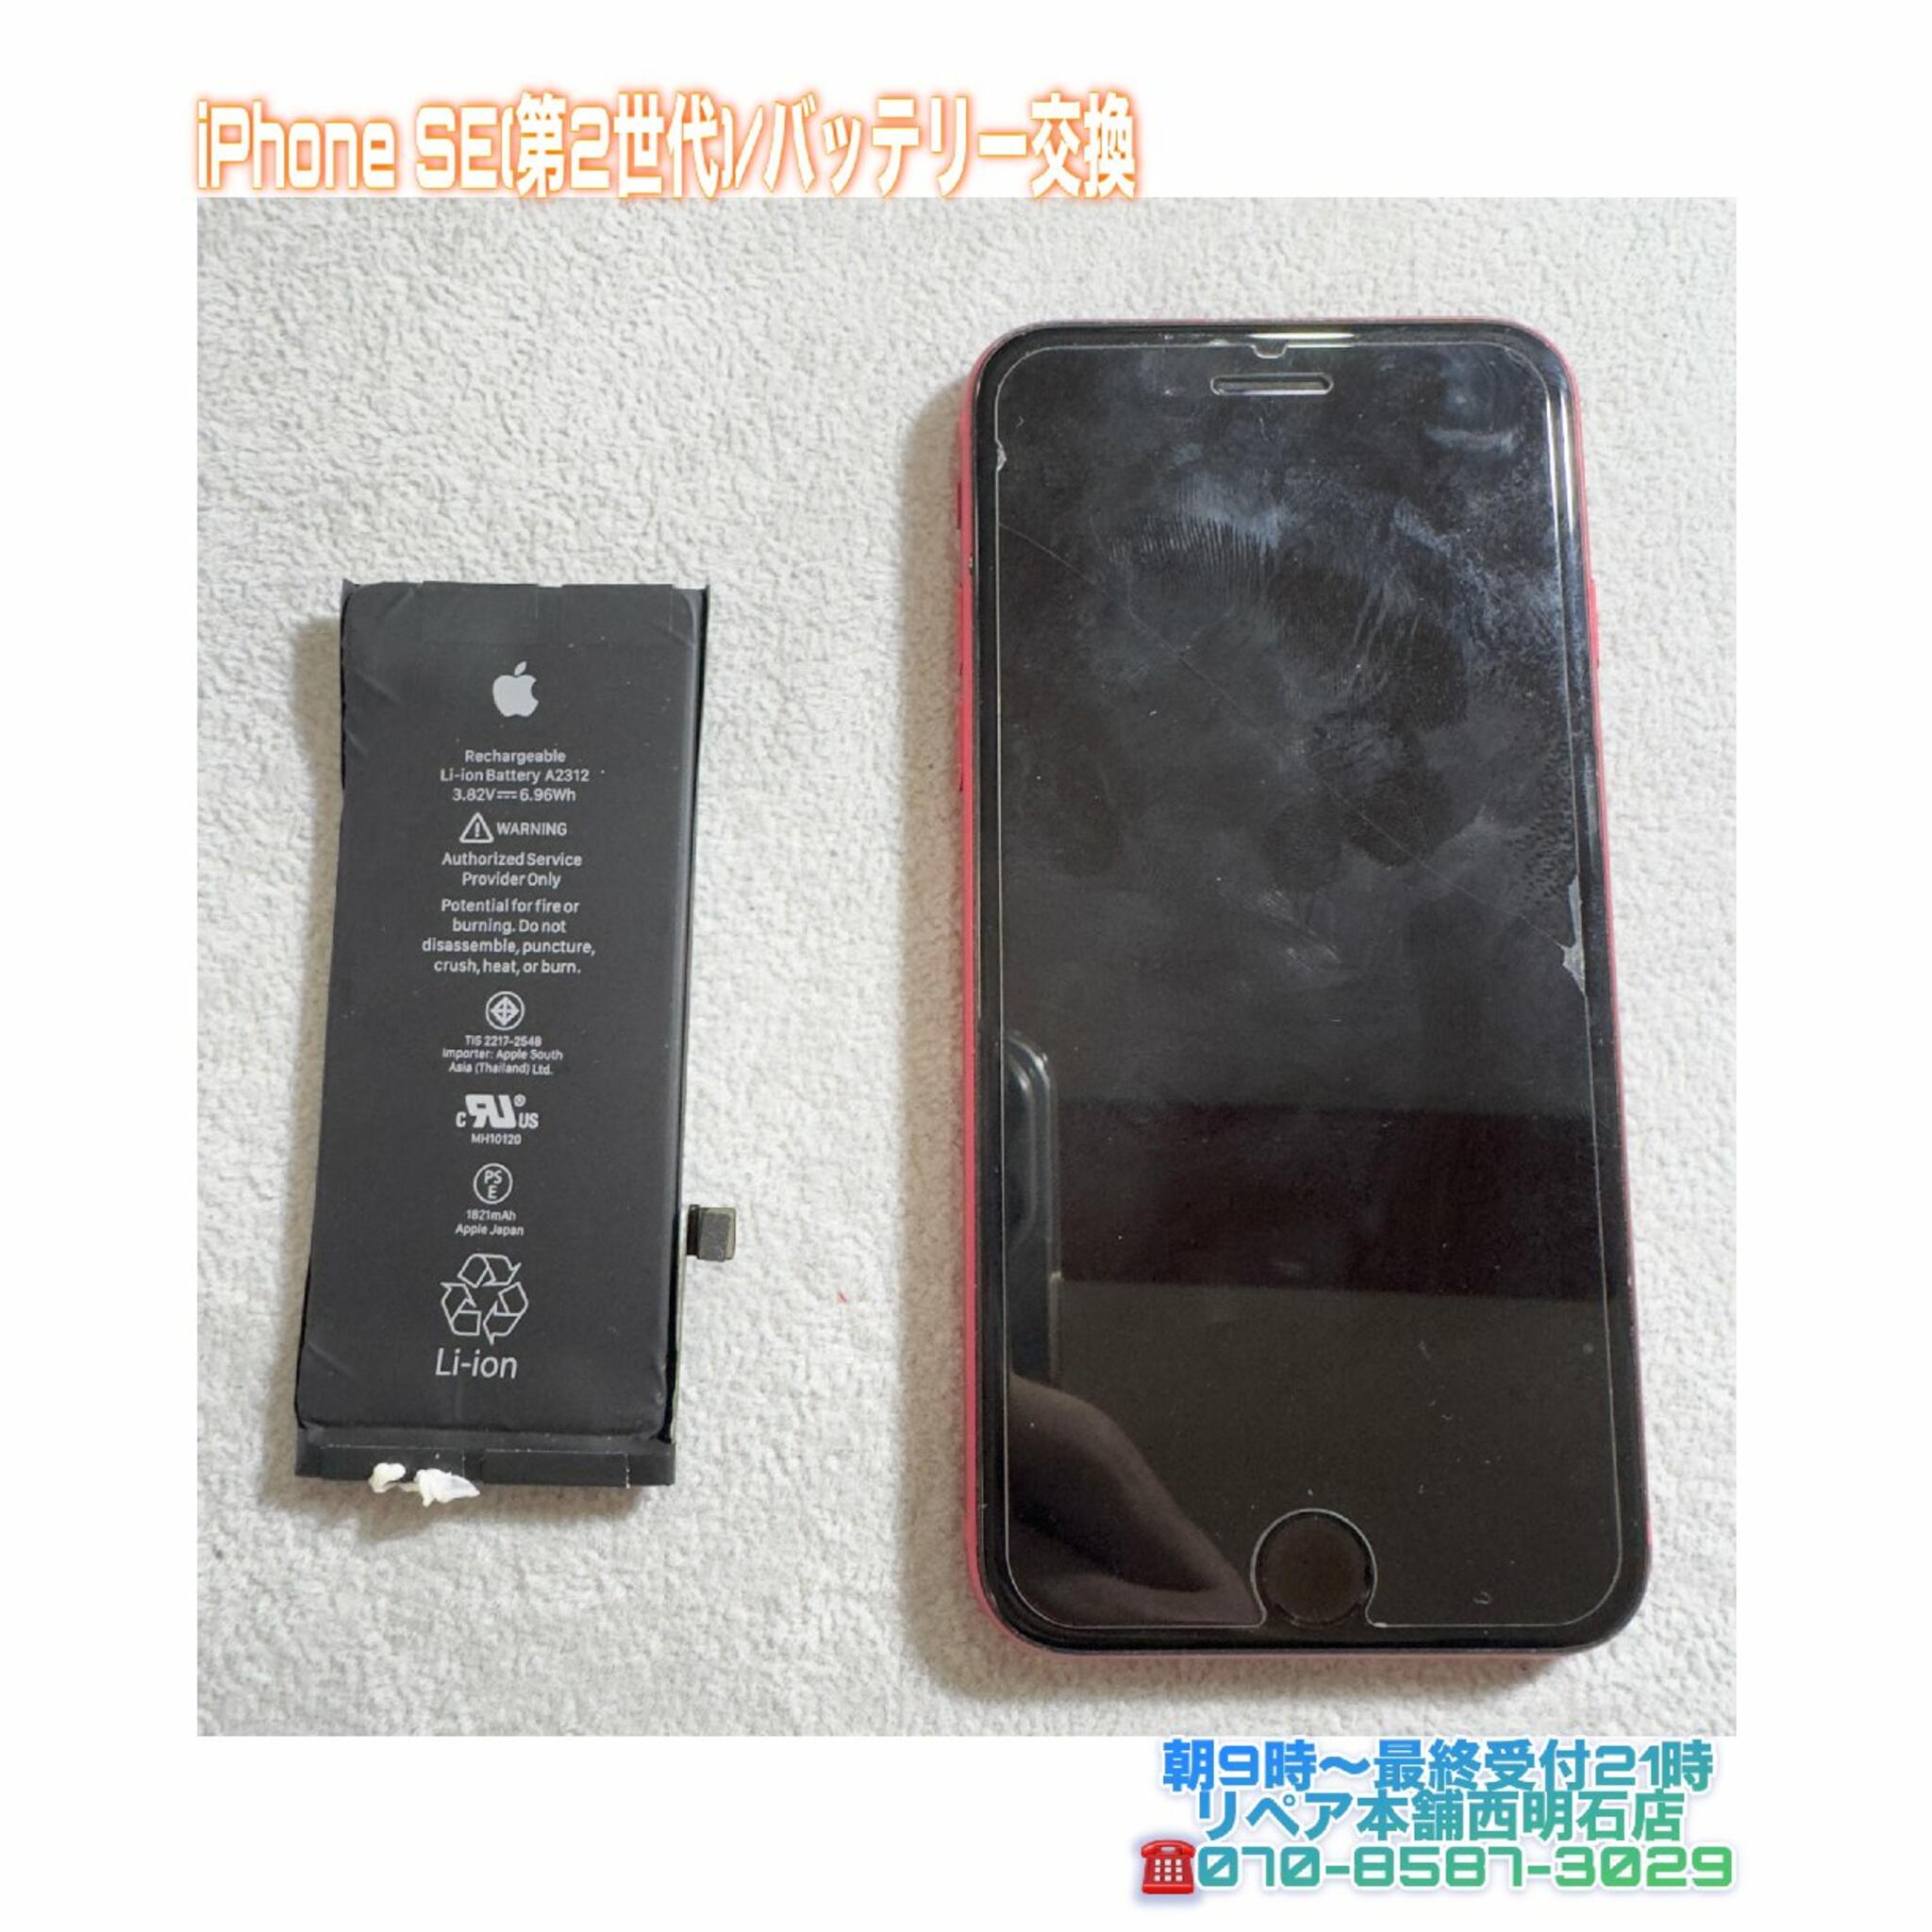 iPhone修理 明石 リペア本舗 西明石店からのお知らせ(💡神戸市西区の方より、iPhone SE(第2世代)バッテリー交換のご依頼を頂きました😀)に関する写真